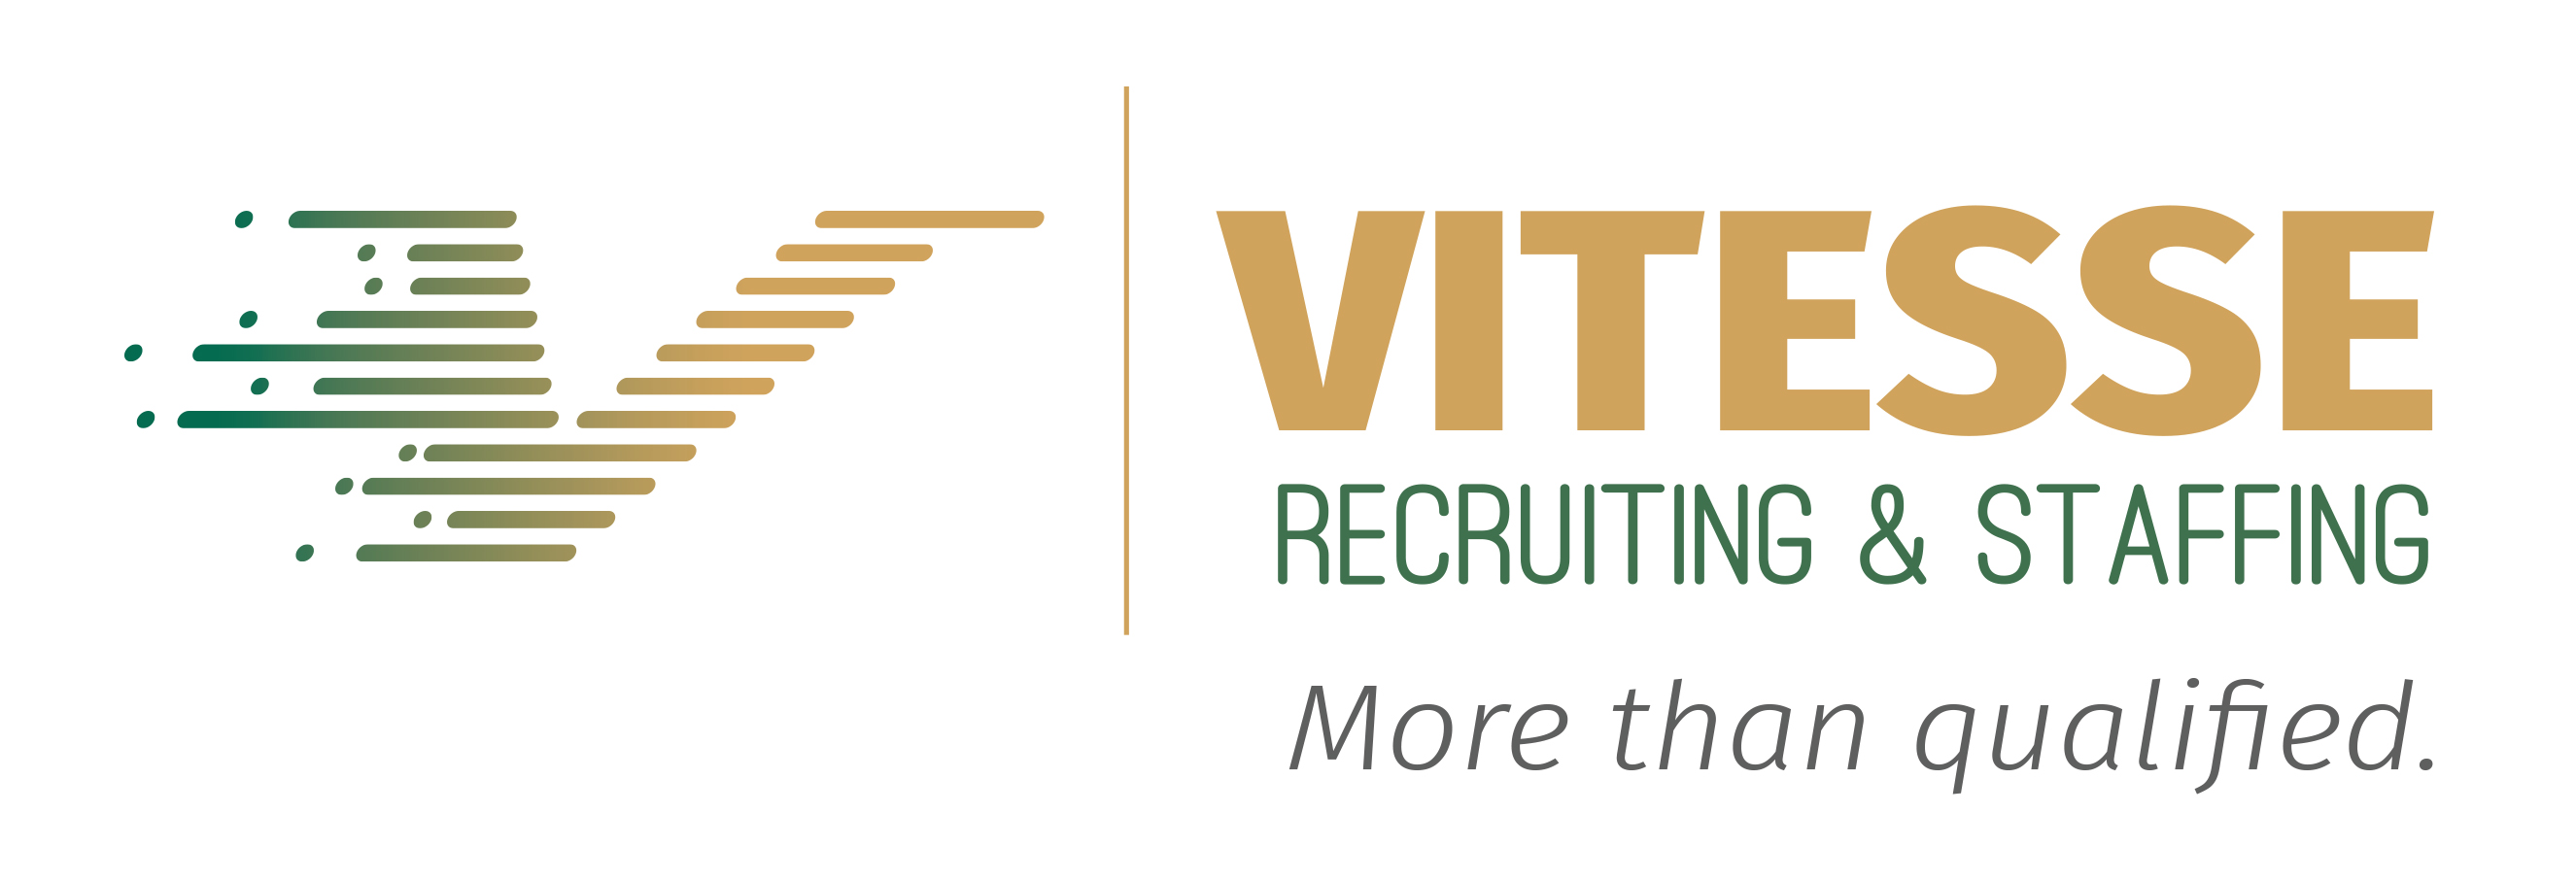 Vitesse Recruiting & Staffing